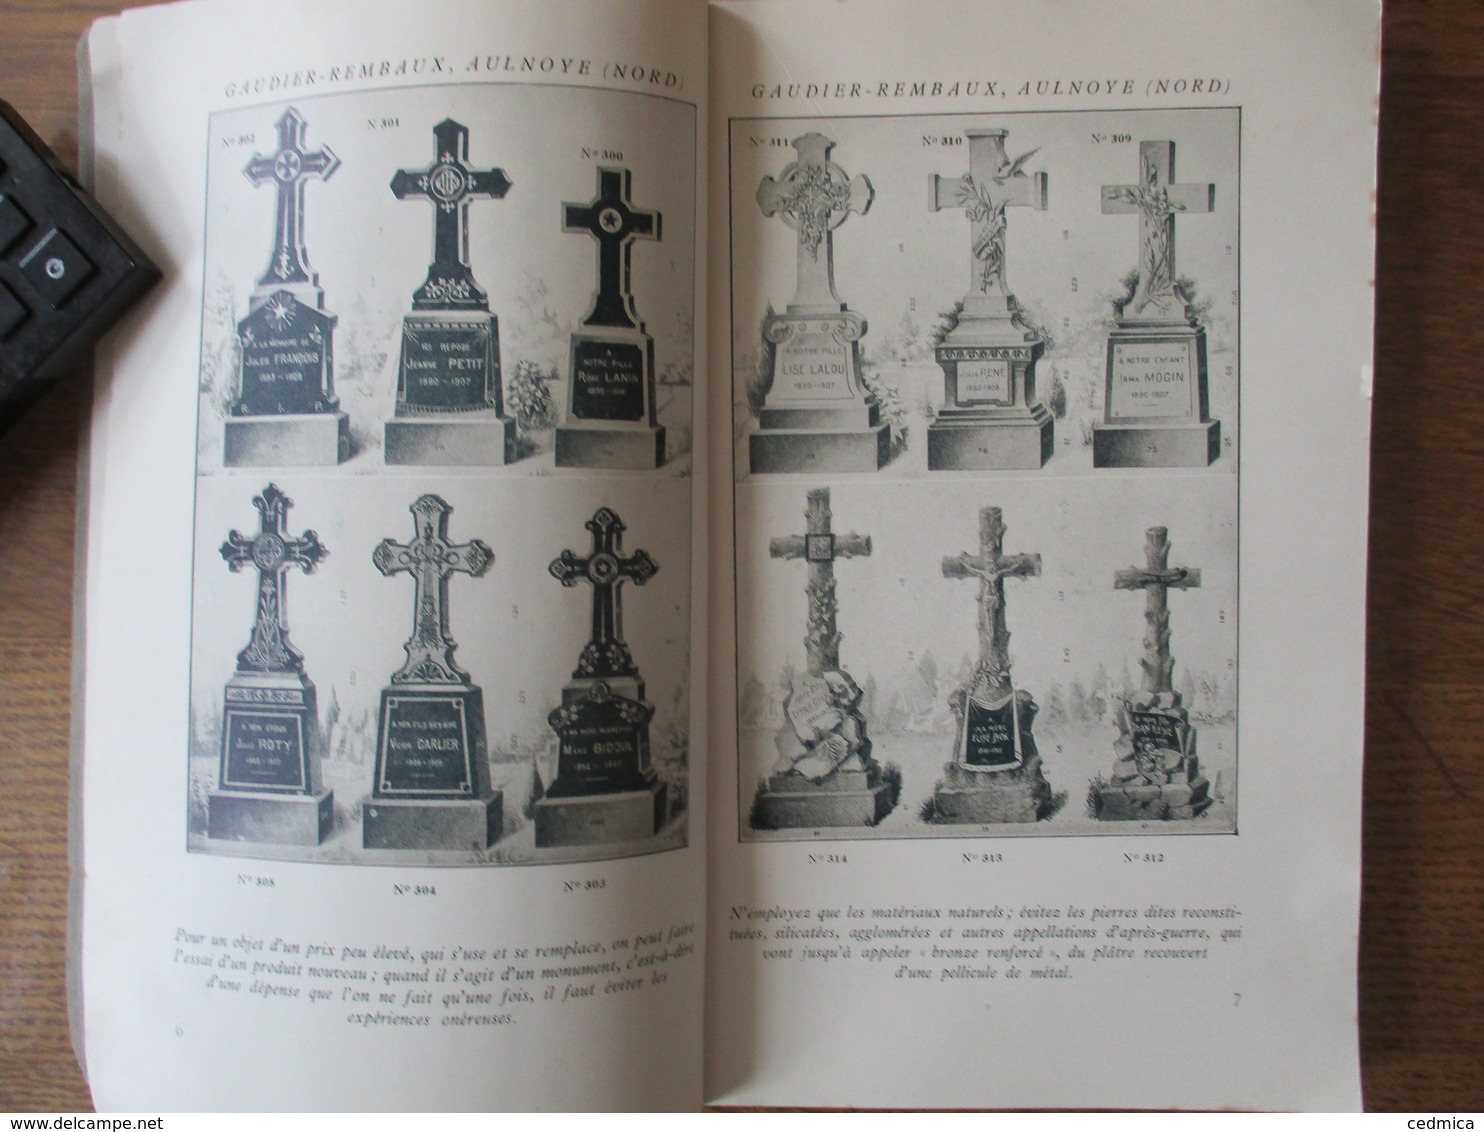 AULNOYE NORD GAUDIER REMBAUX MONUMENTS FUNERAIRES SOCIETE GRANITIERE DU NORD CATALOGUE 1925 98 PAGES - Advertising